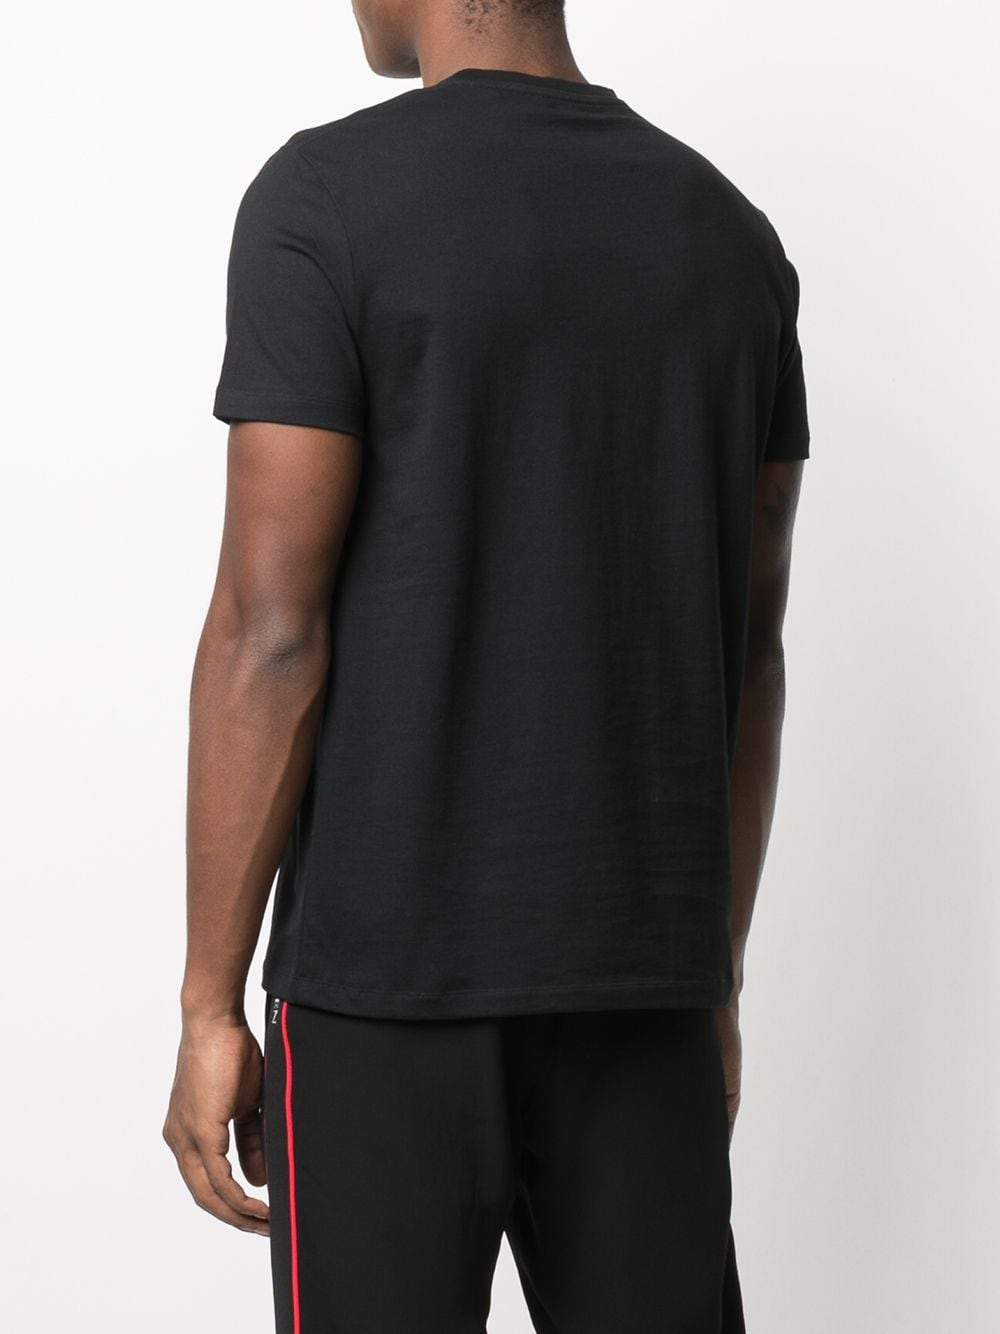 ALEXANDER MCQUEEN Logo Patch T Shirt Black - Maison De Fashion 